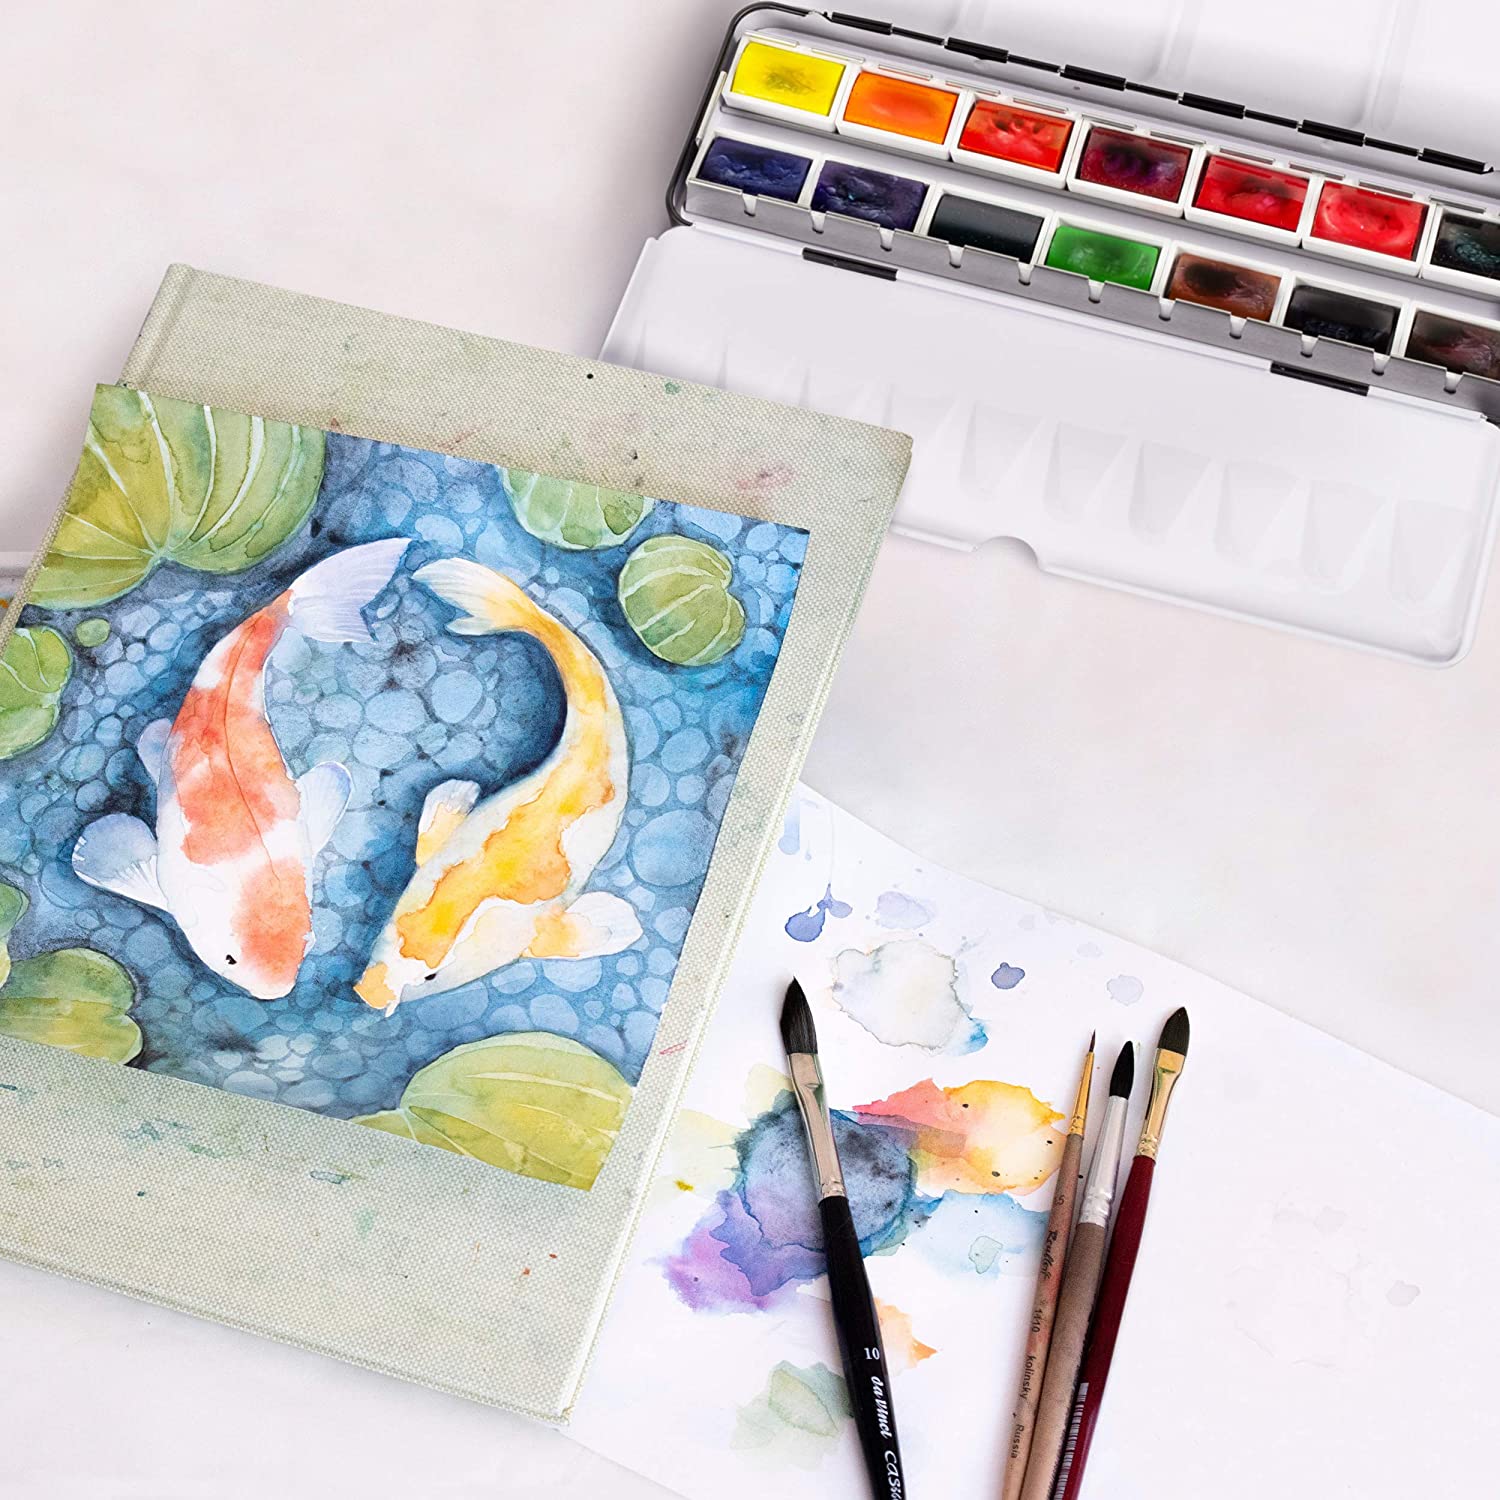 Sennelier - L'Aquarelle Professional Watercolor Paint Set (14 Full Pa on kdesns)